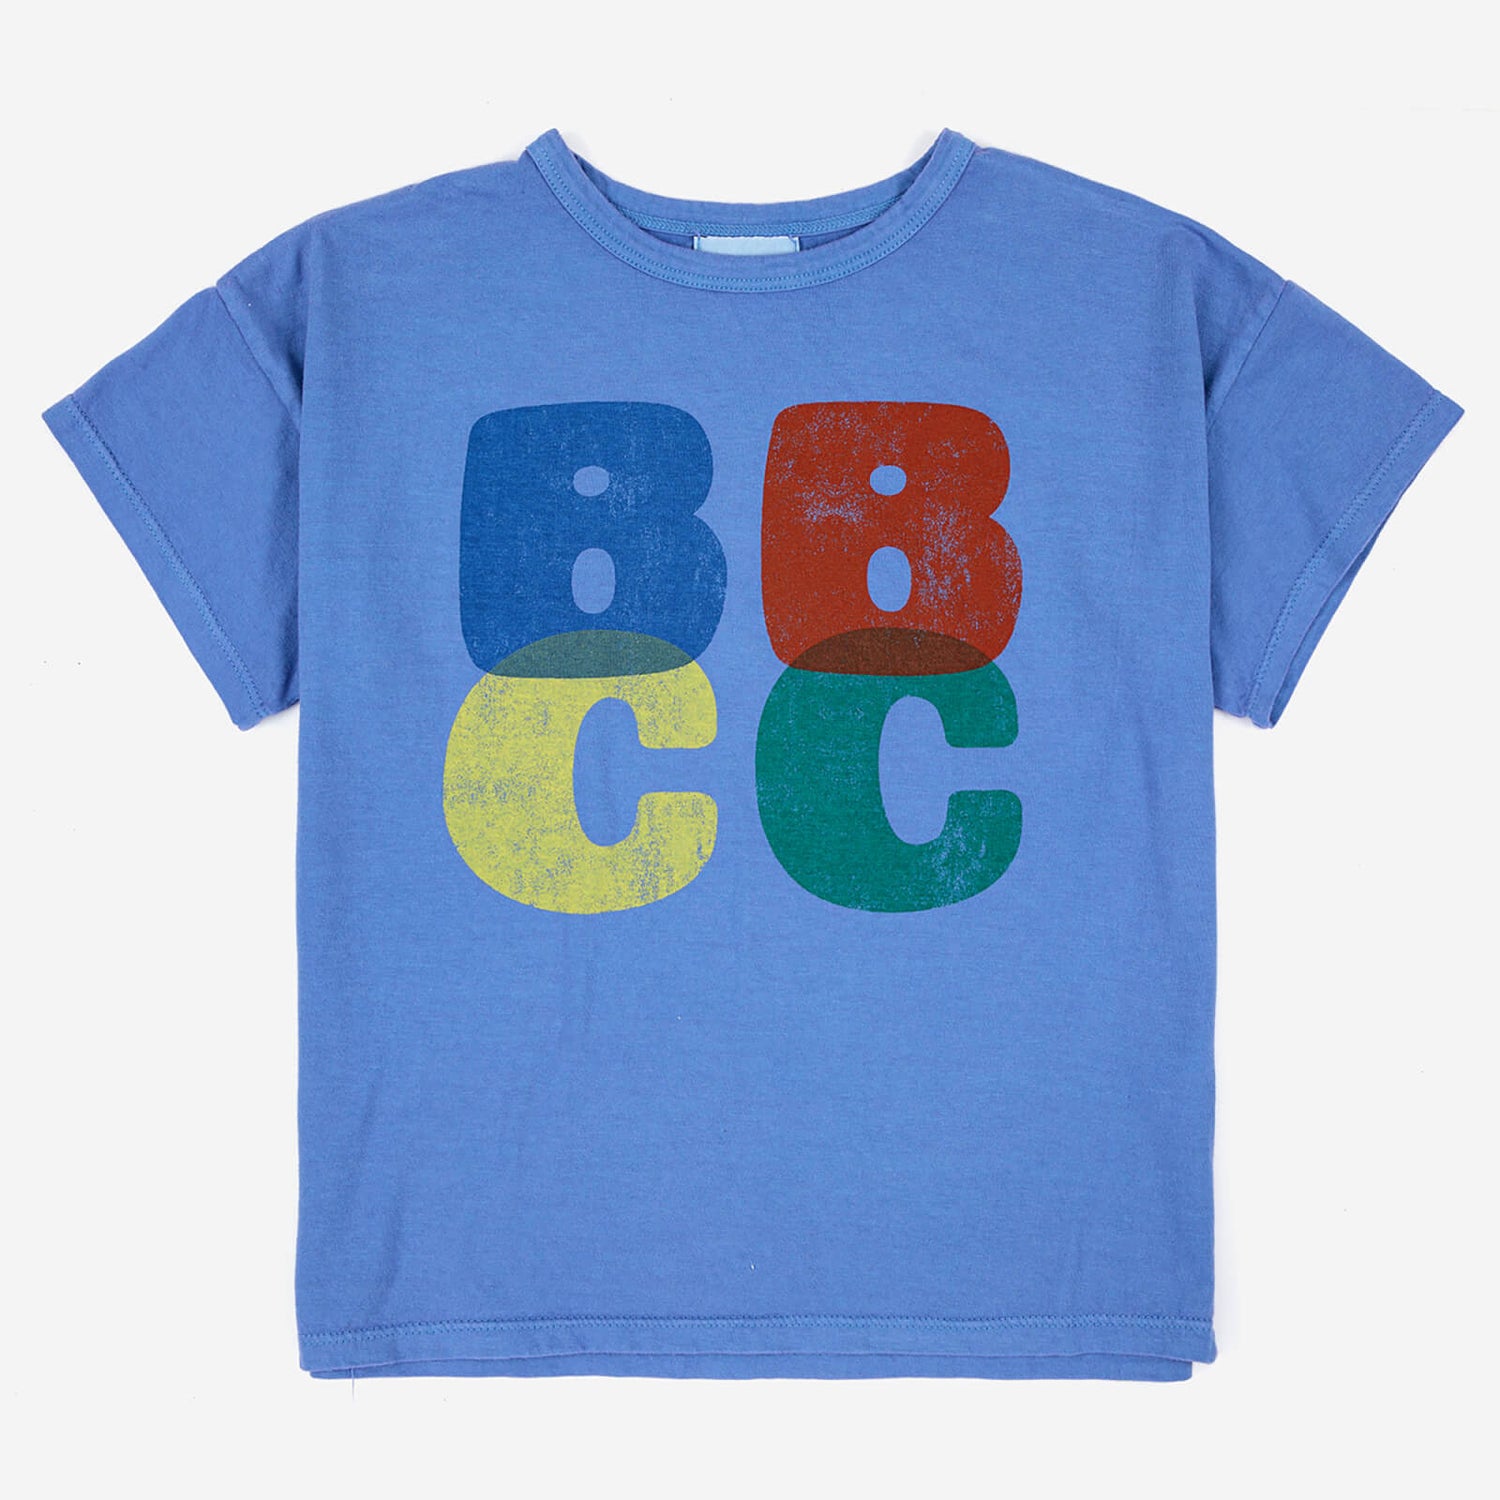 Bobo Choses Kids' Printed Cotton-Jersey T-Shirt